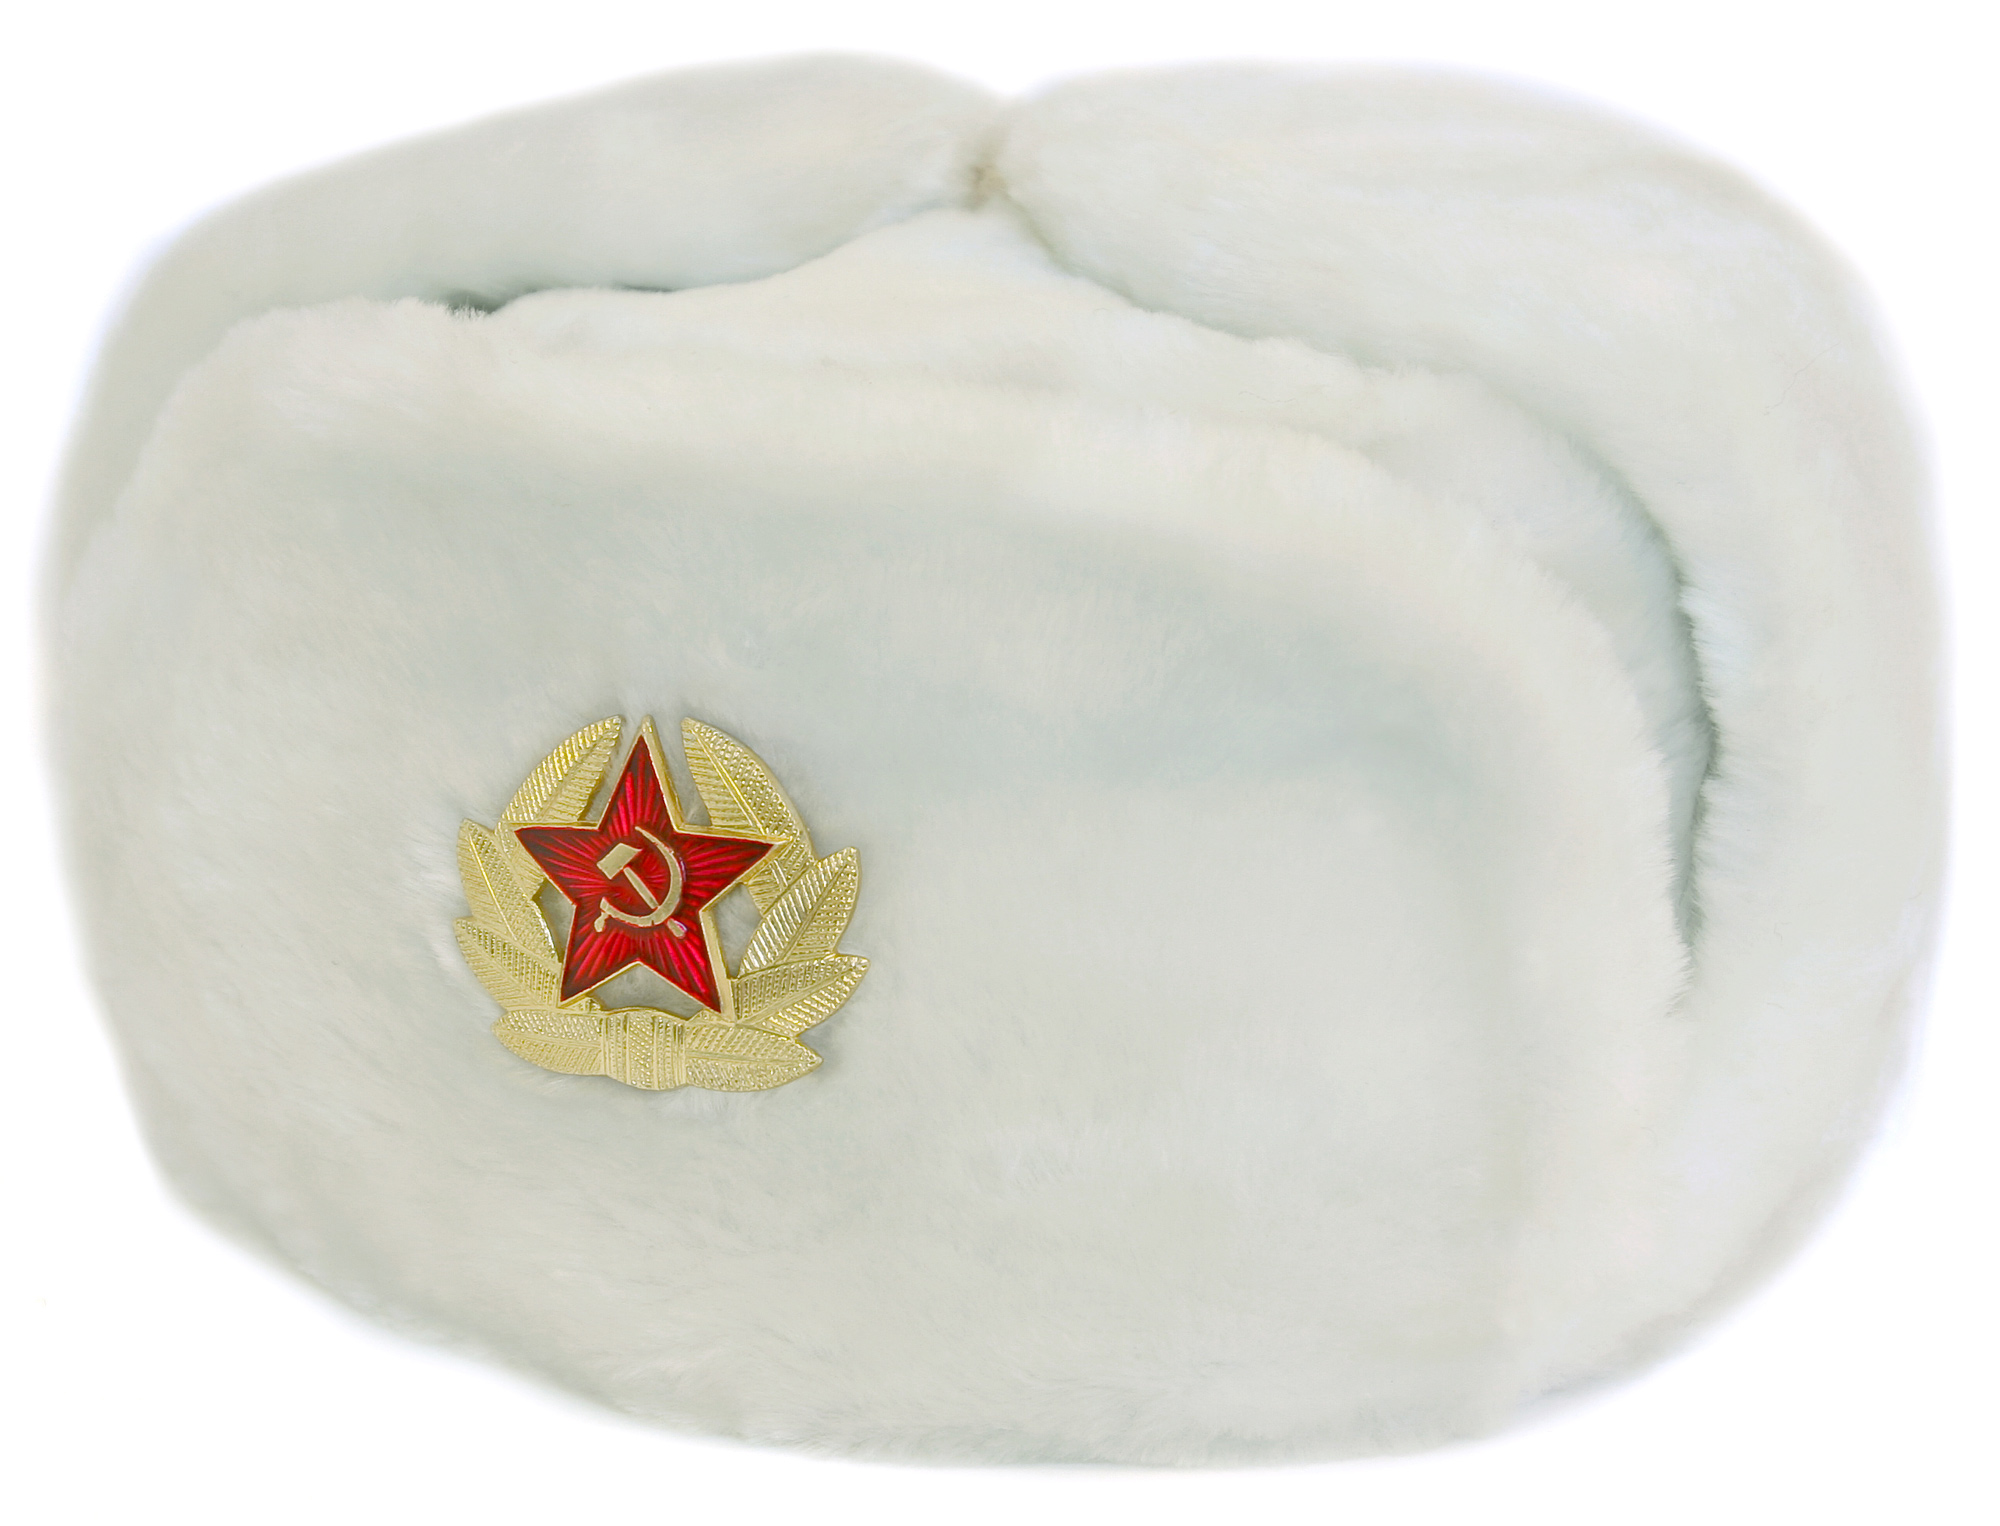 white russian fur hat